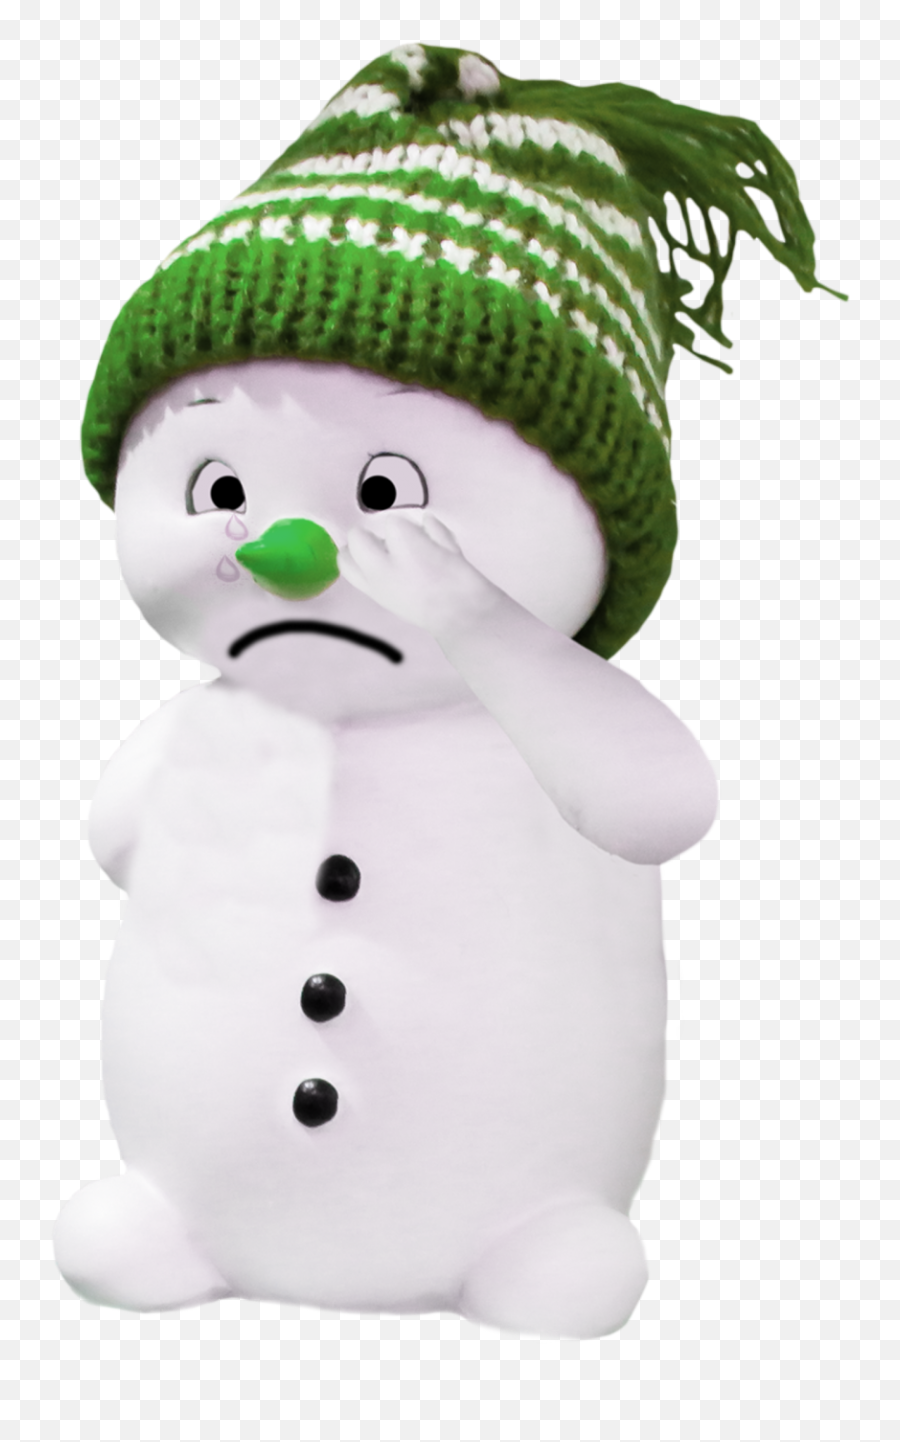 Snow Man Png Image - Christmas Day,Snow Man Png